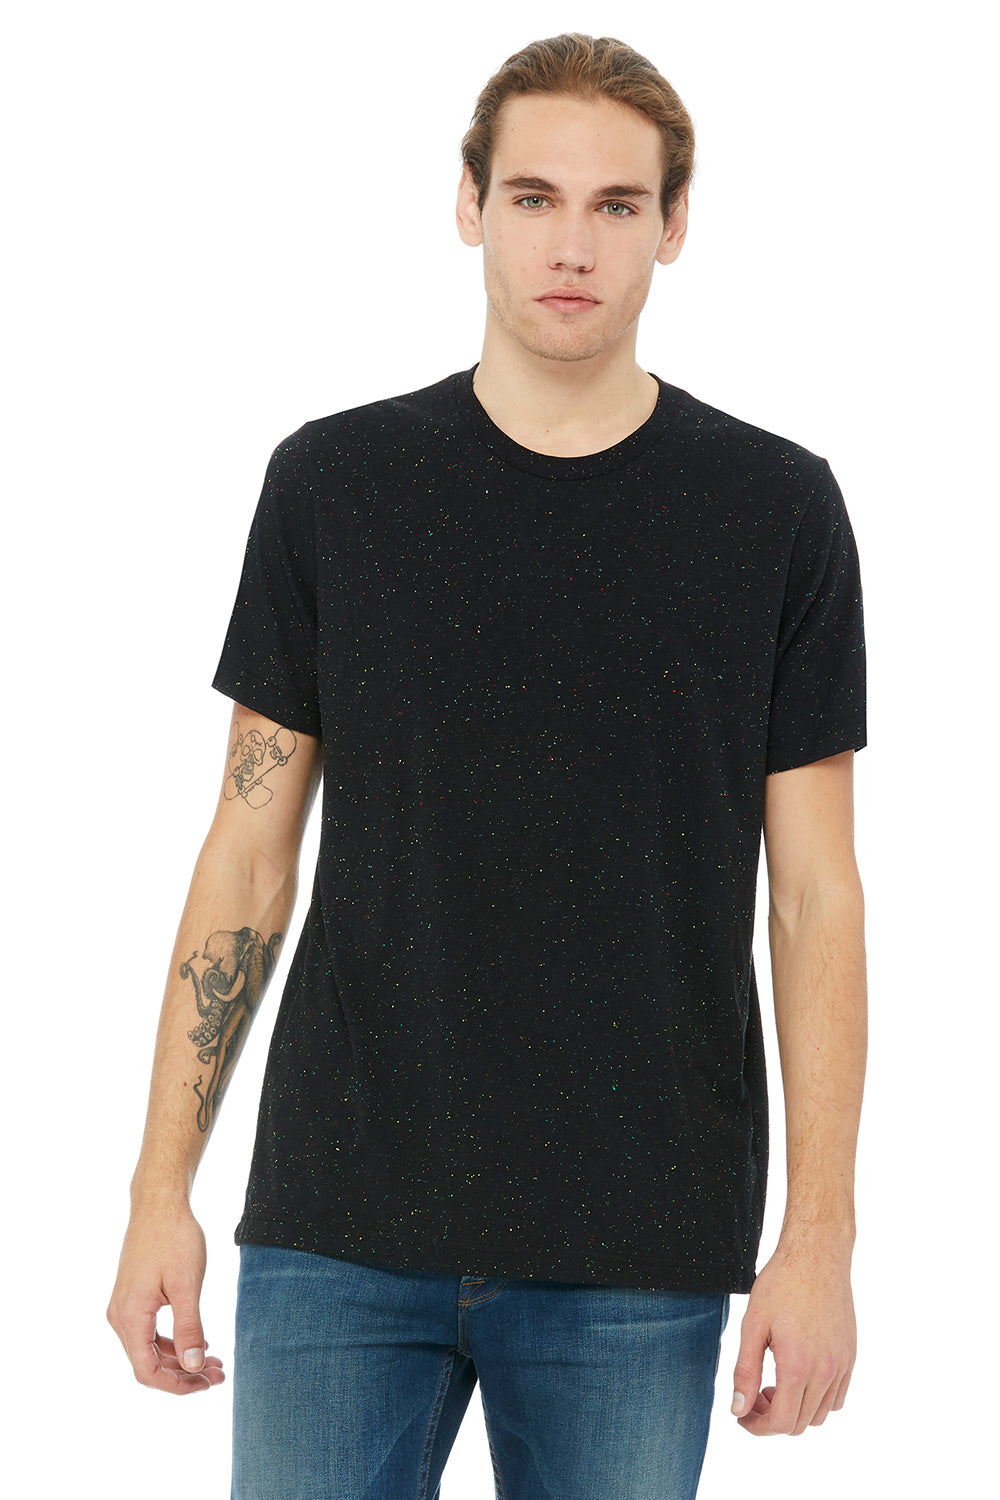 Bella + Canvas 3650 Mens Short Sleeve Crewneck T-Shirt Black Speckled Front